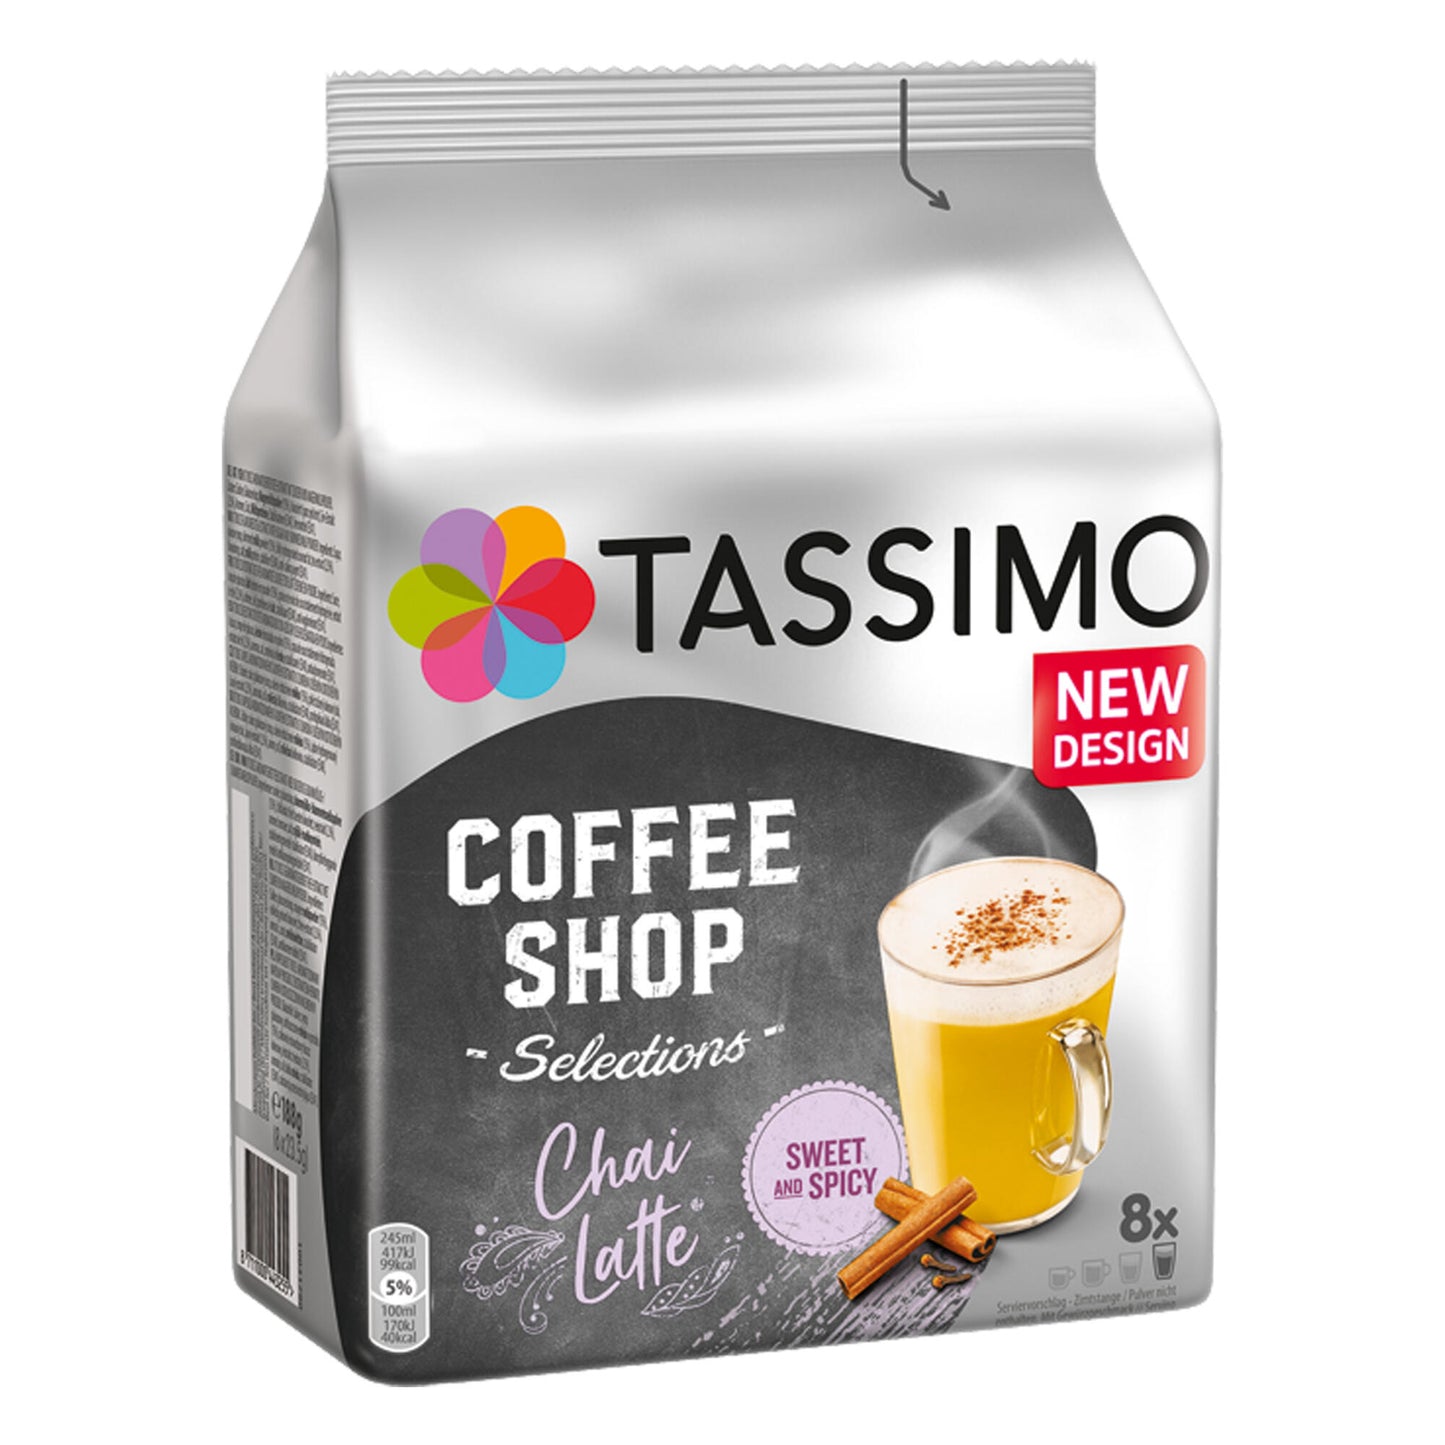 Tassimo Chai Latte, Coffee Shop Selections, Chai Tee, Heißgetränk, 188 g, 8 T-Discs / Portionen